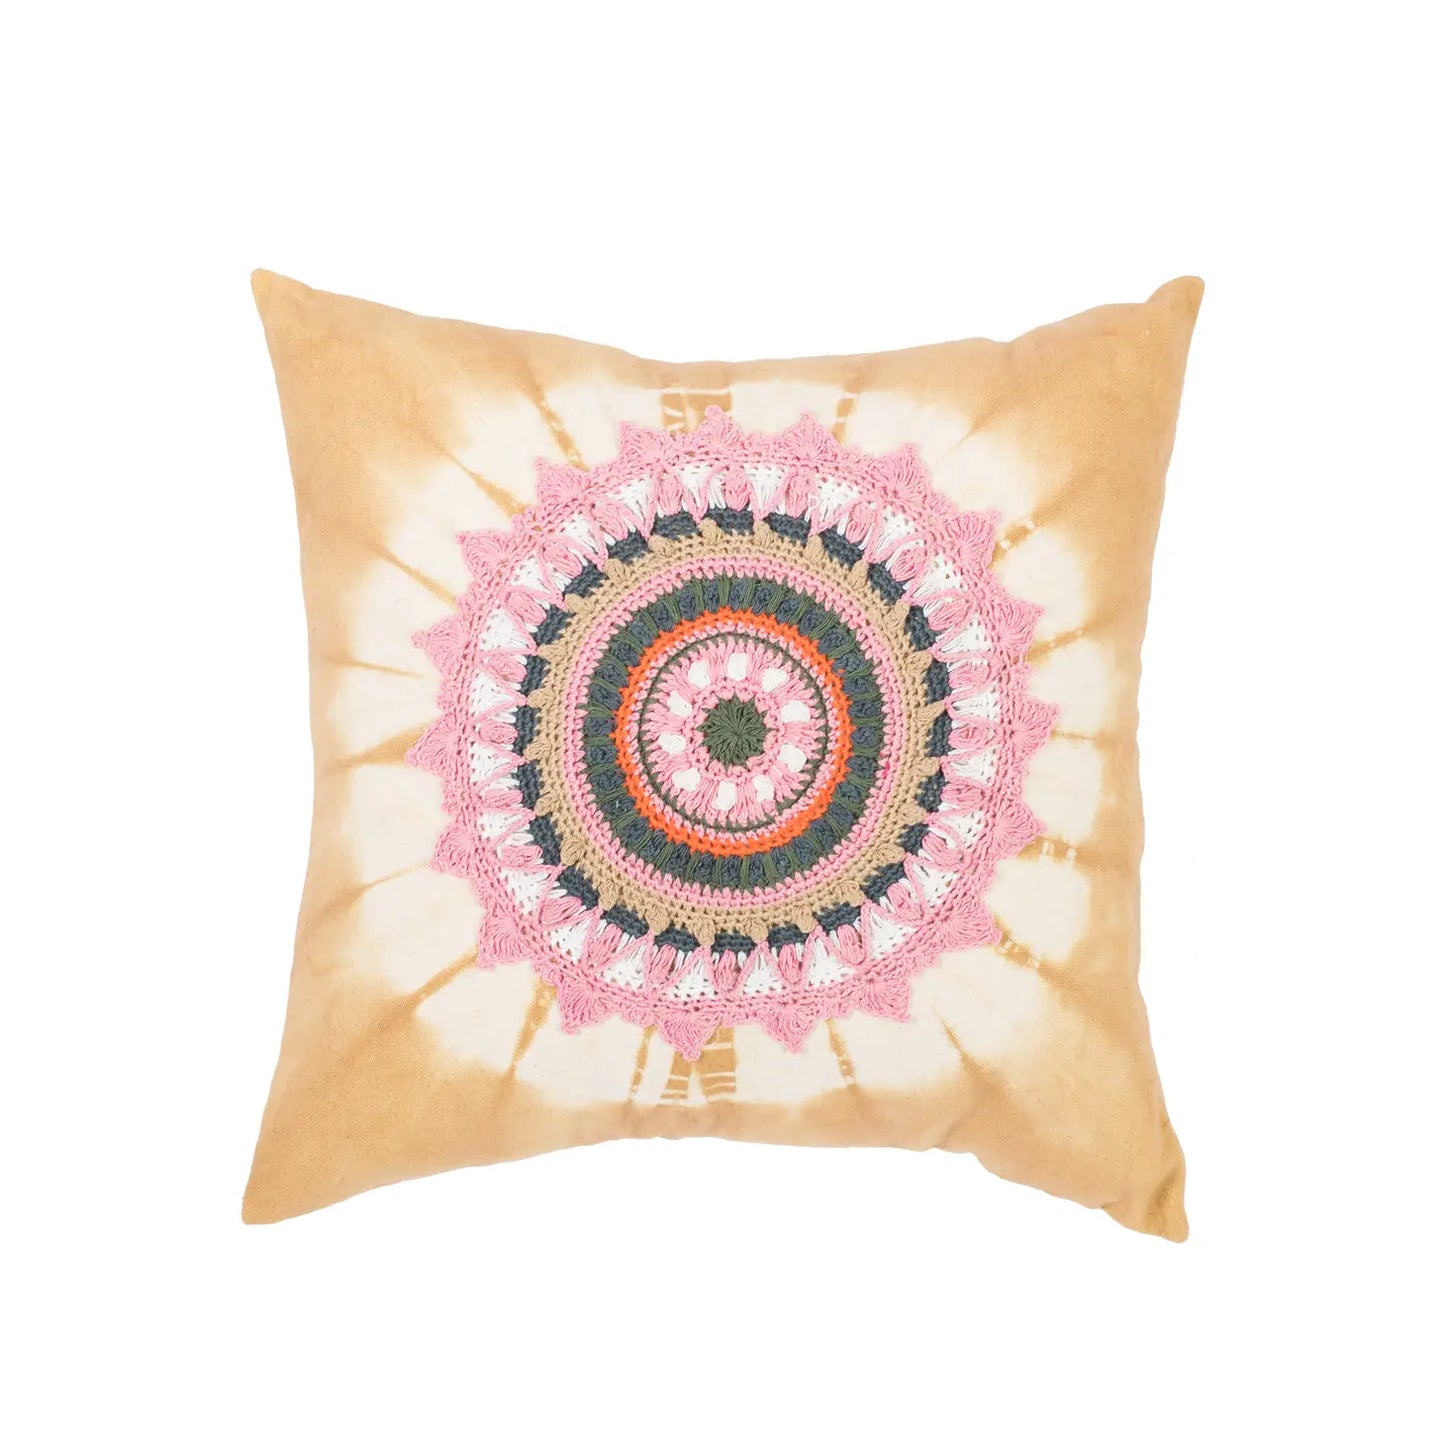 Crochet Mandala Throw Pillow -Tan - Moon Room Shop and Wellness